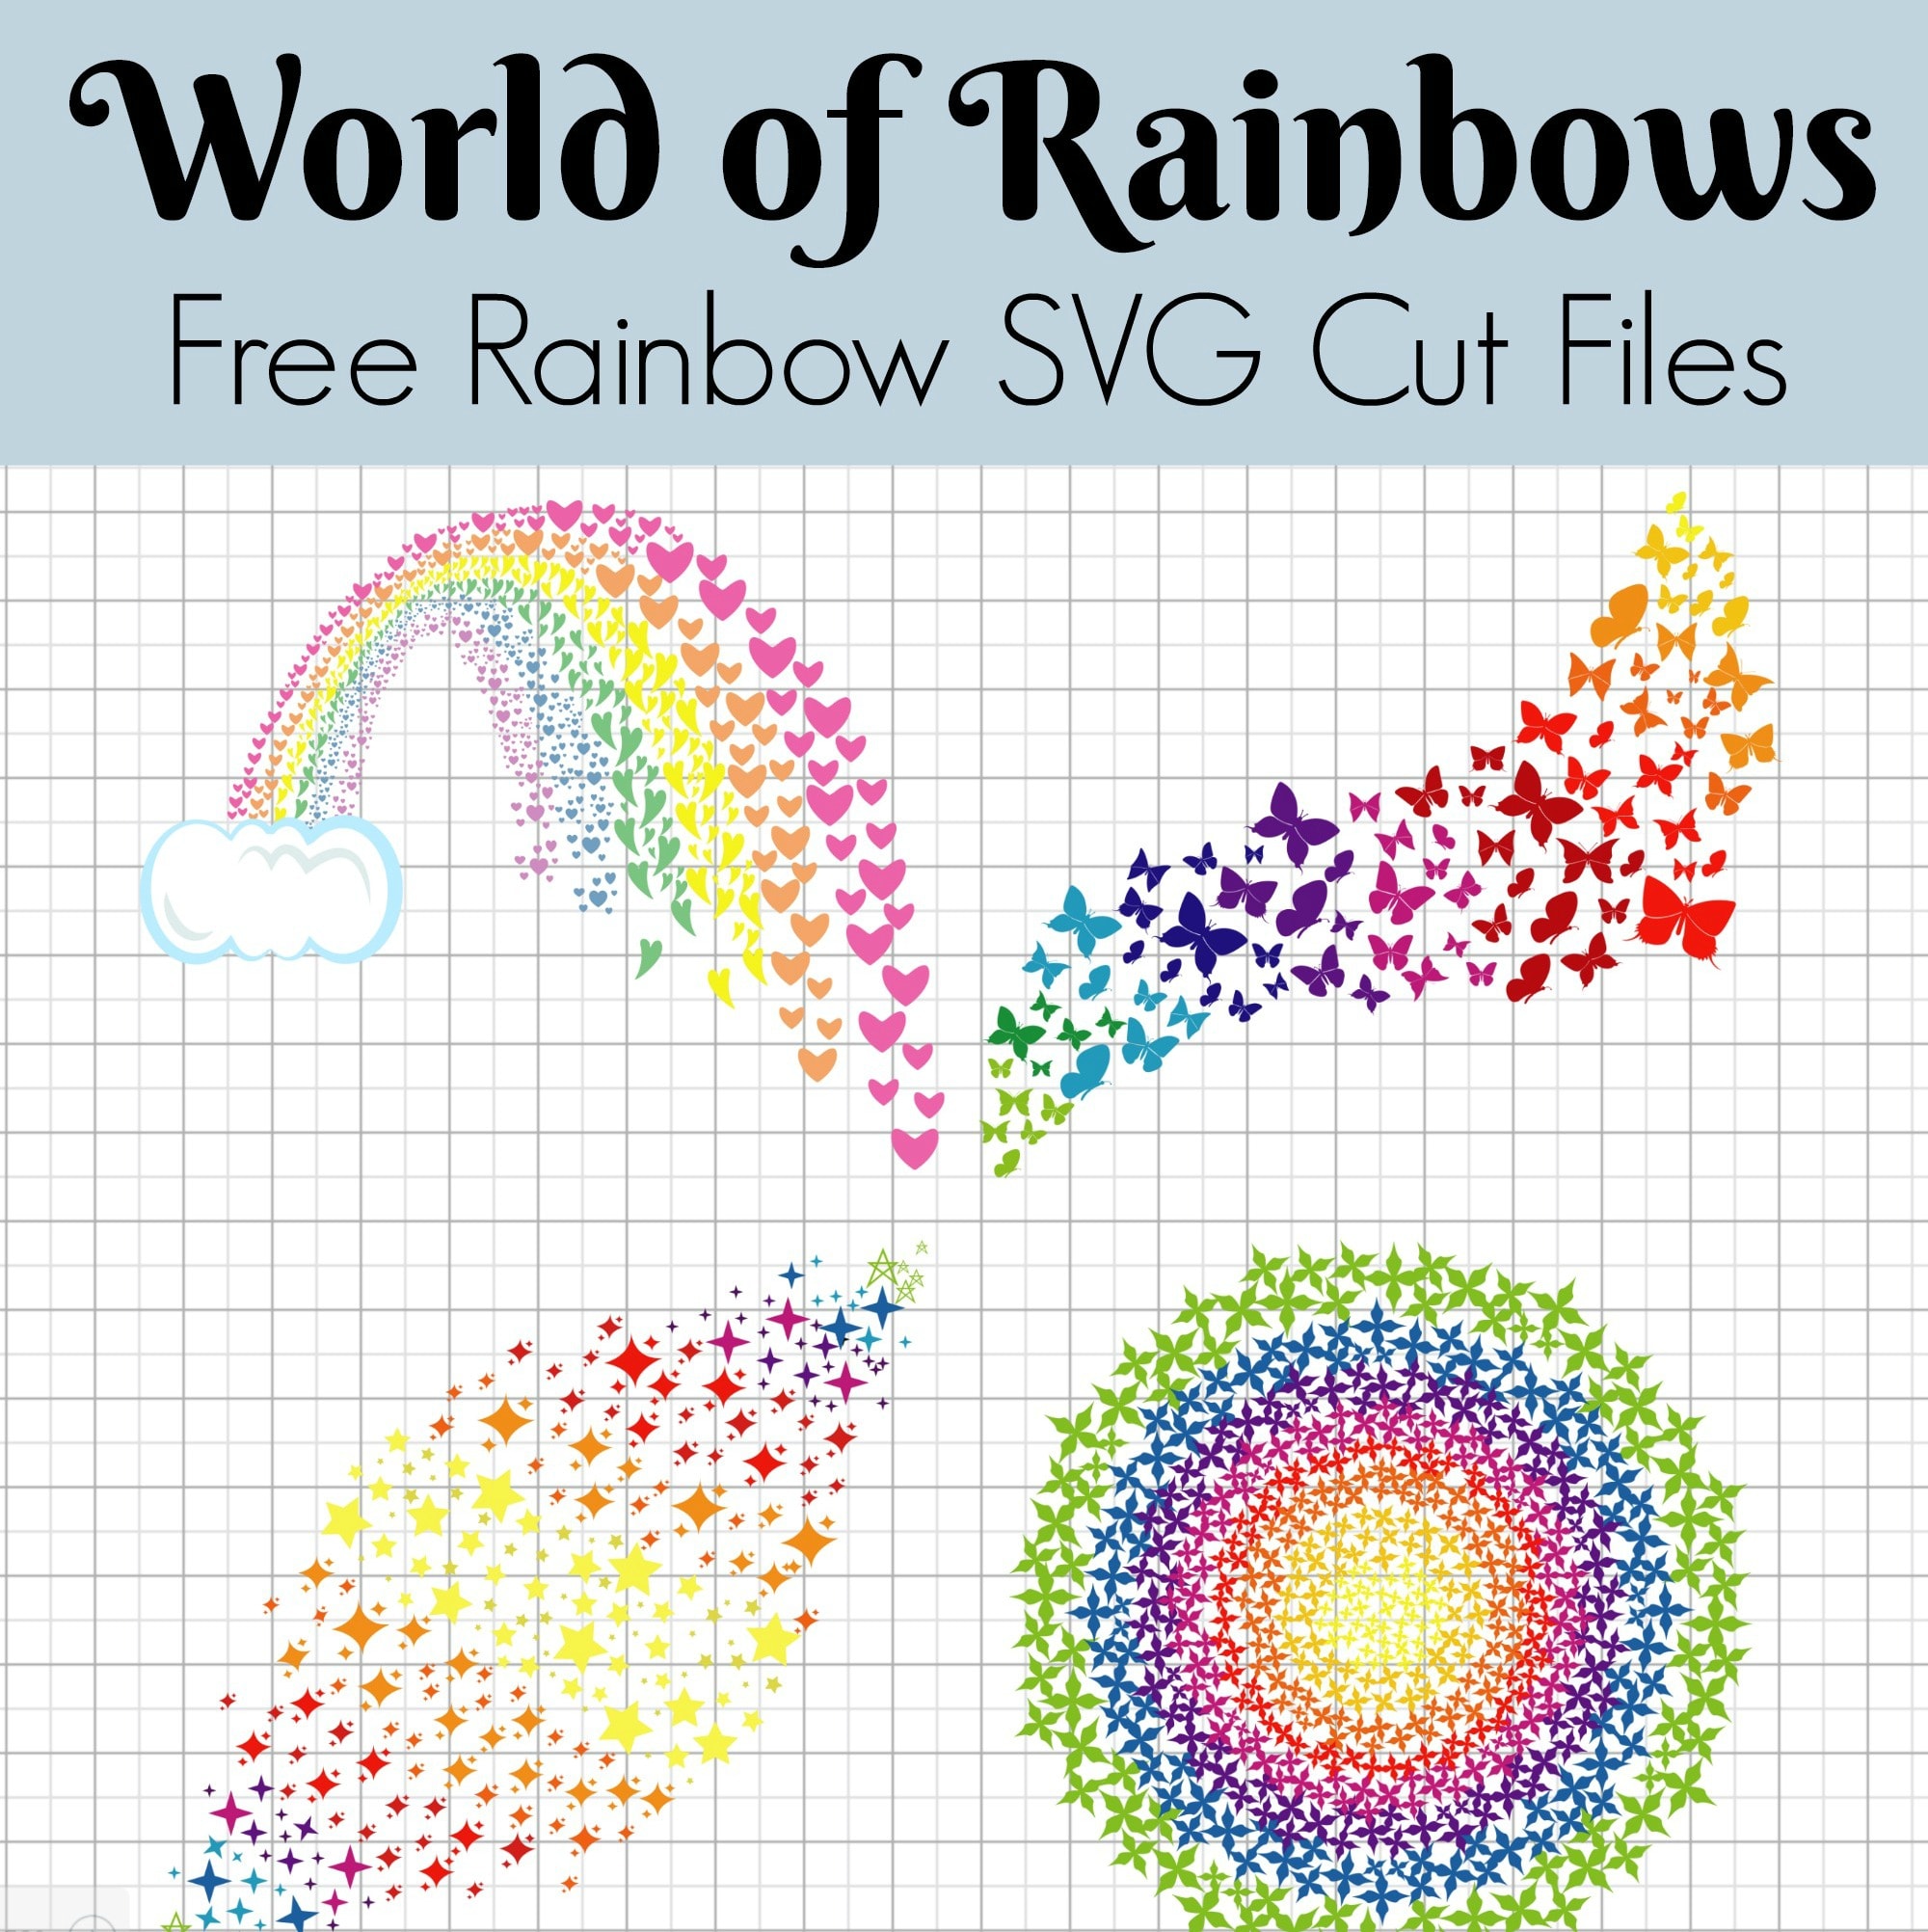 World of Rainbows – Free Rainbow SVG Cut Files